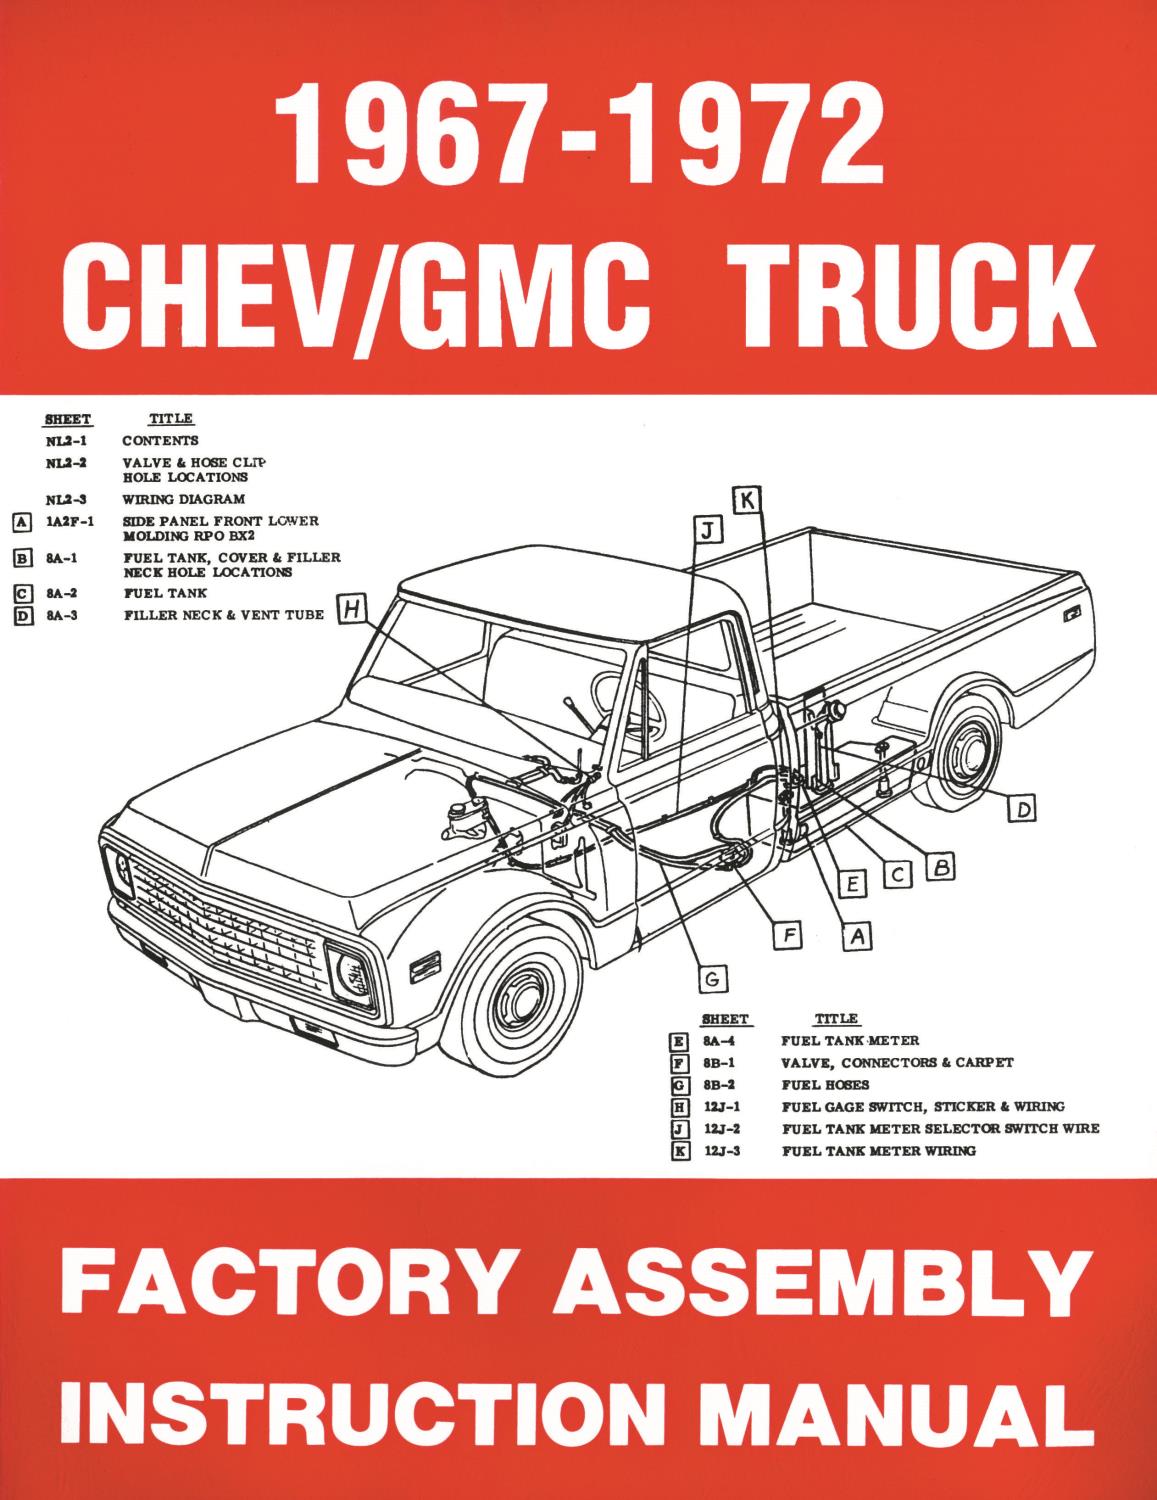 Assembly Manual for 1967-1972 Chevrolet & GMC Trucks